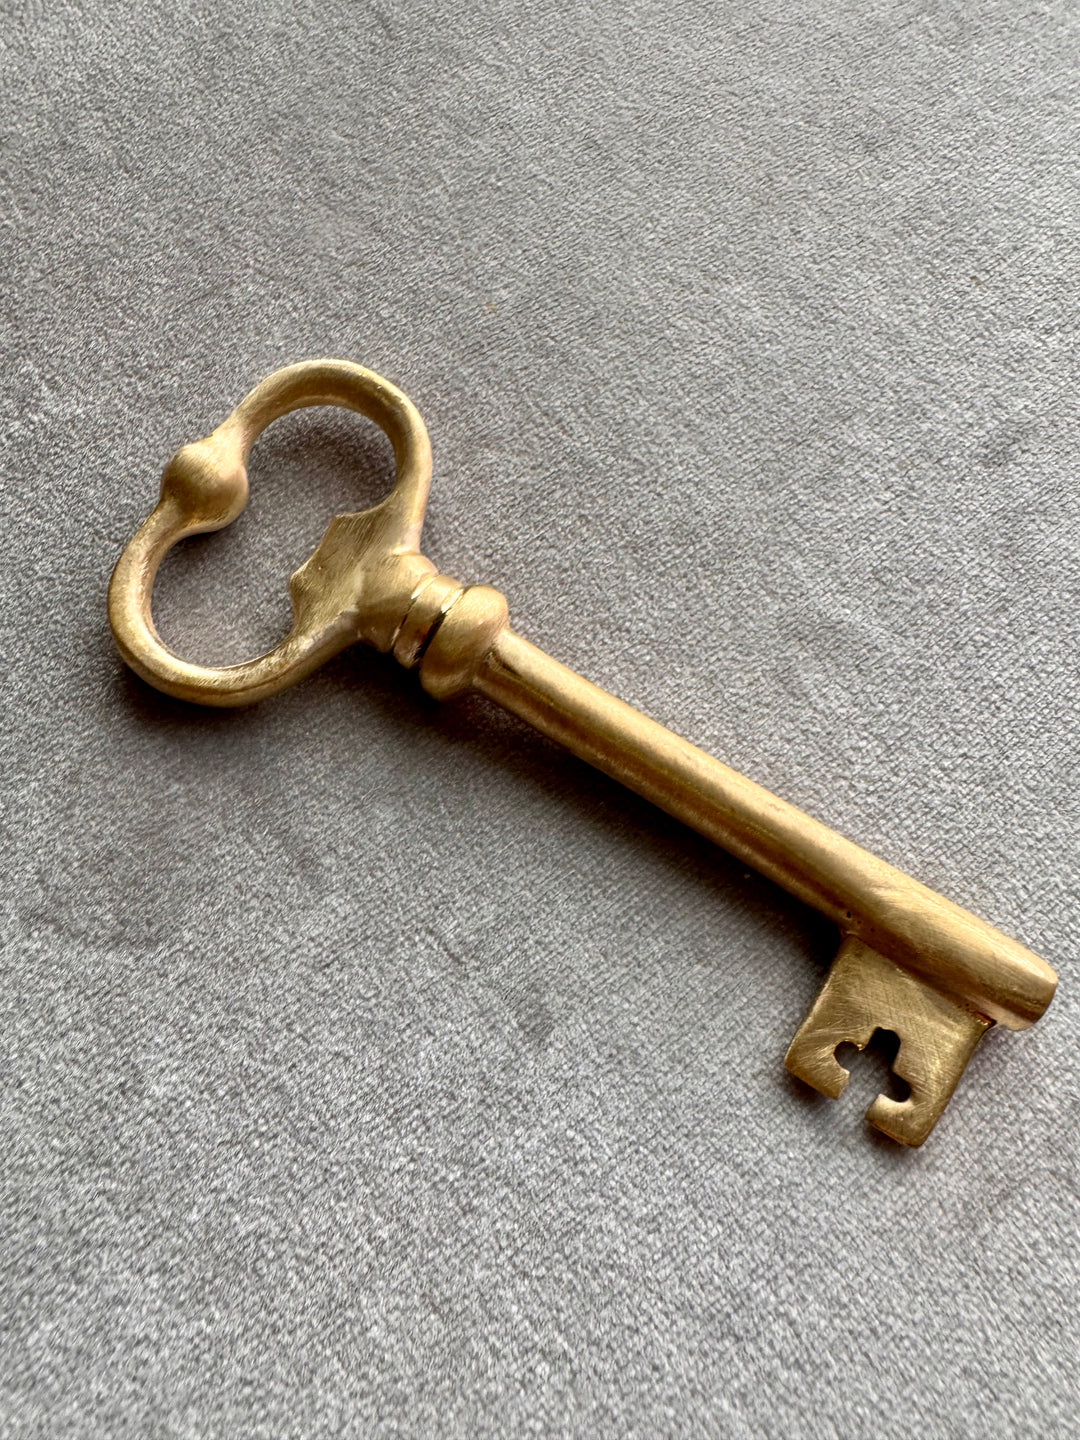 Brass Bottle Opener - Vintage Key